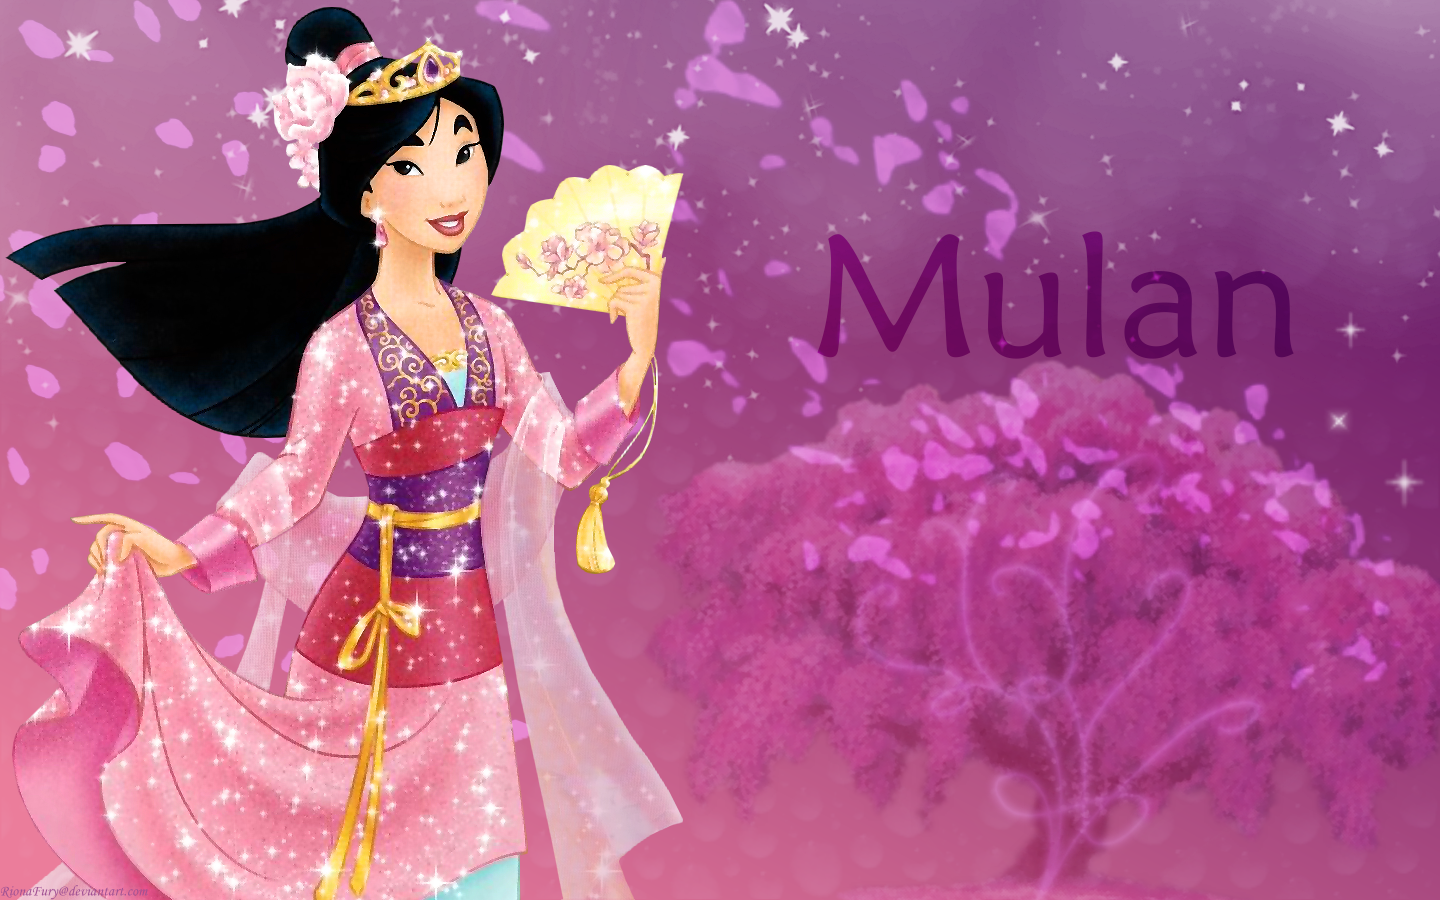 mulan-disney-princess-mulan-wallpaper-33894127-fanpop